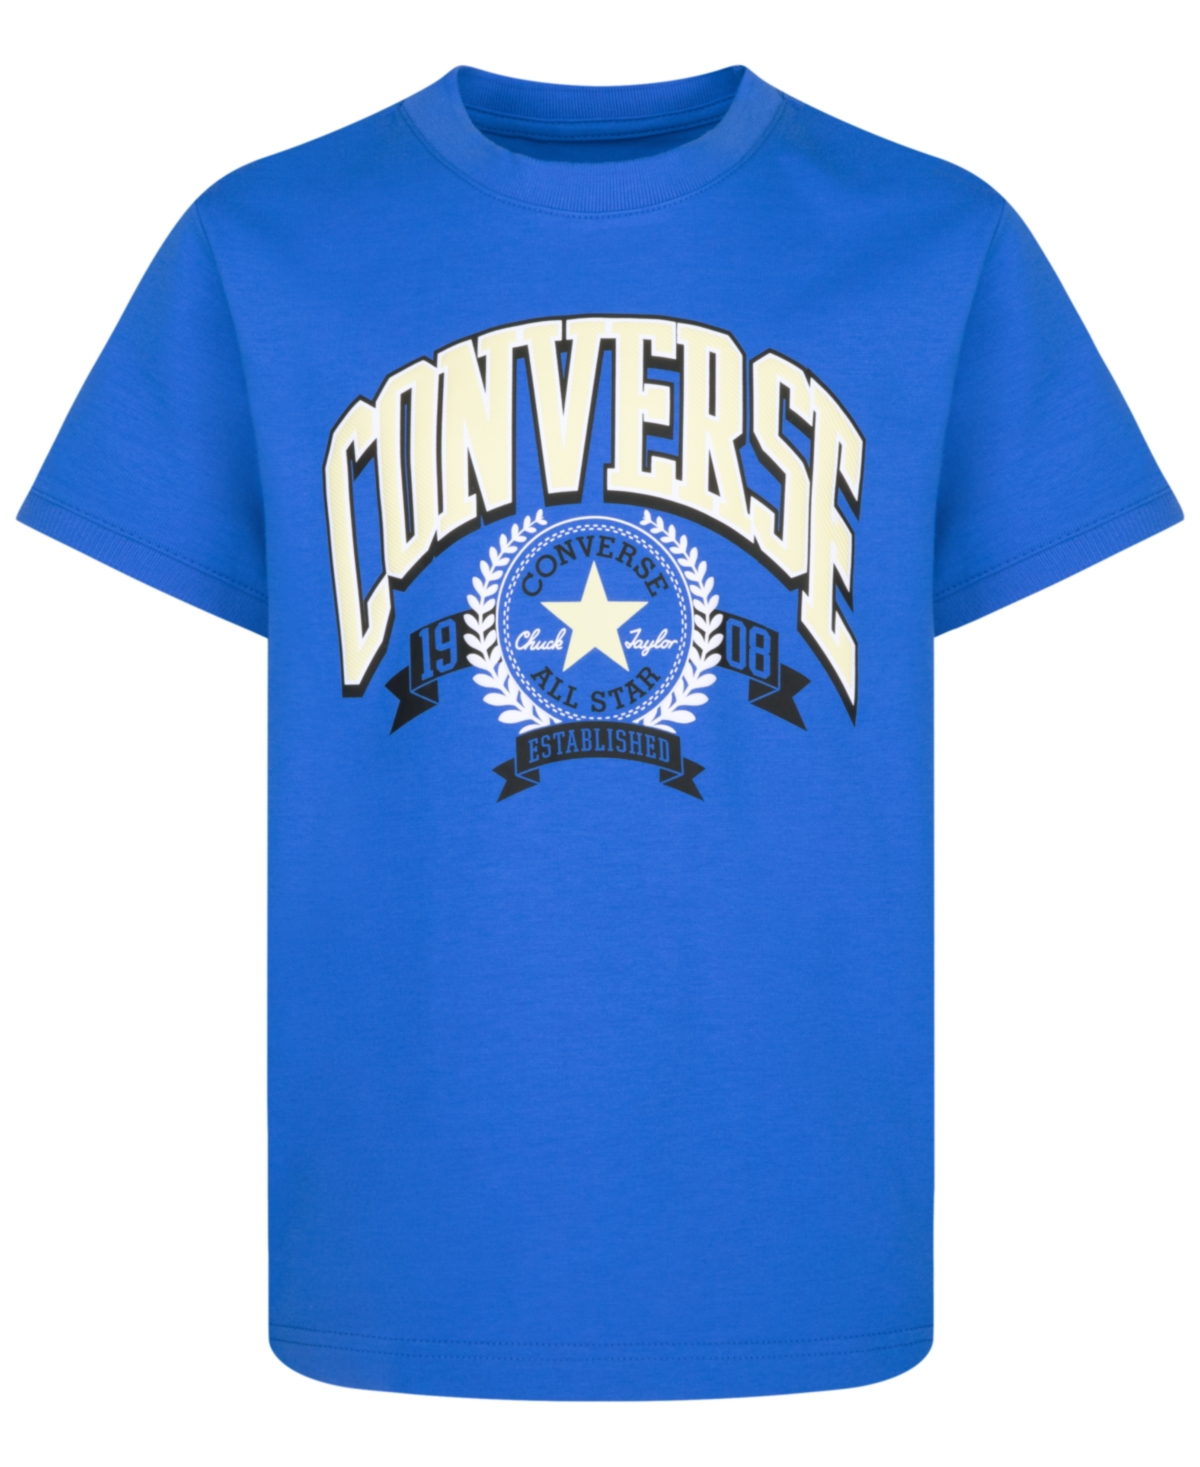 Converse Kids' Big Boys Knit Short Sleeve T-shirt In Blue Slushy